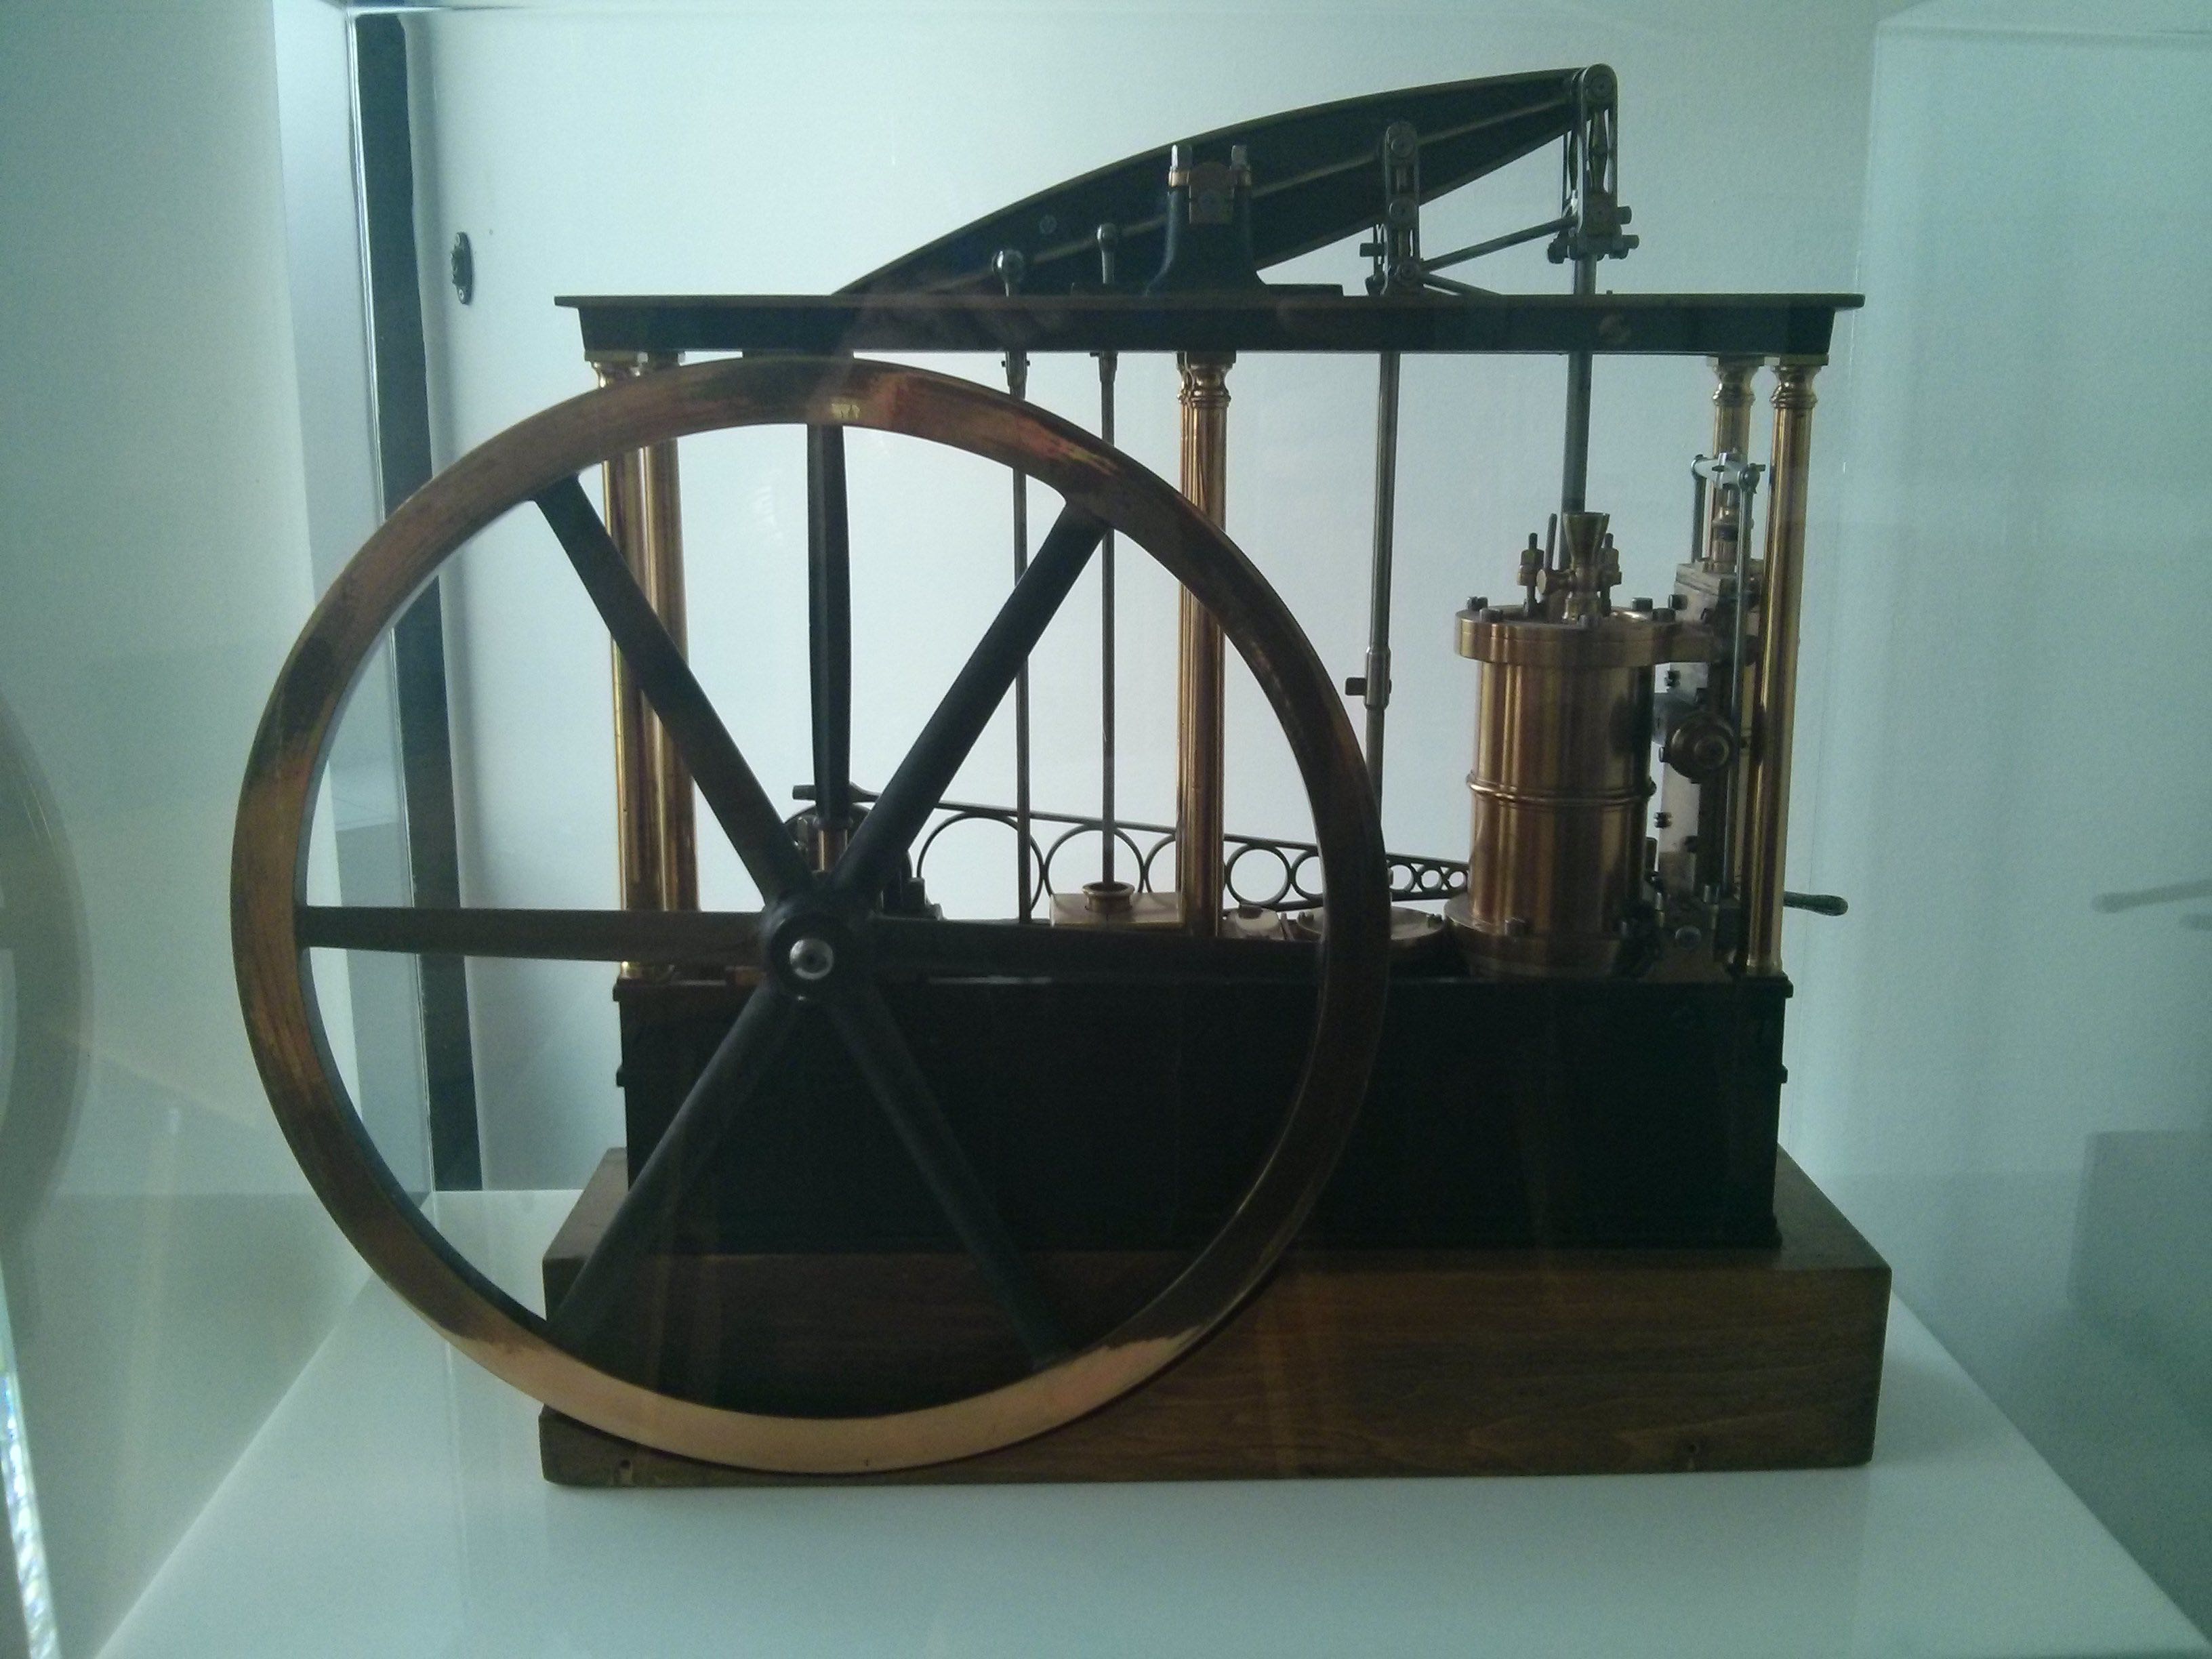 James watt was the of the modern steam engine фото 87